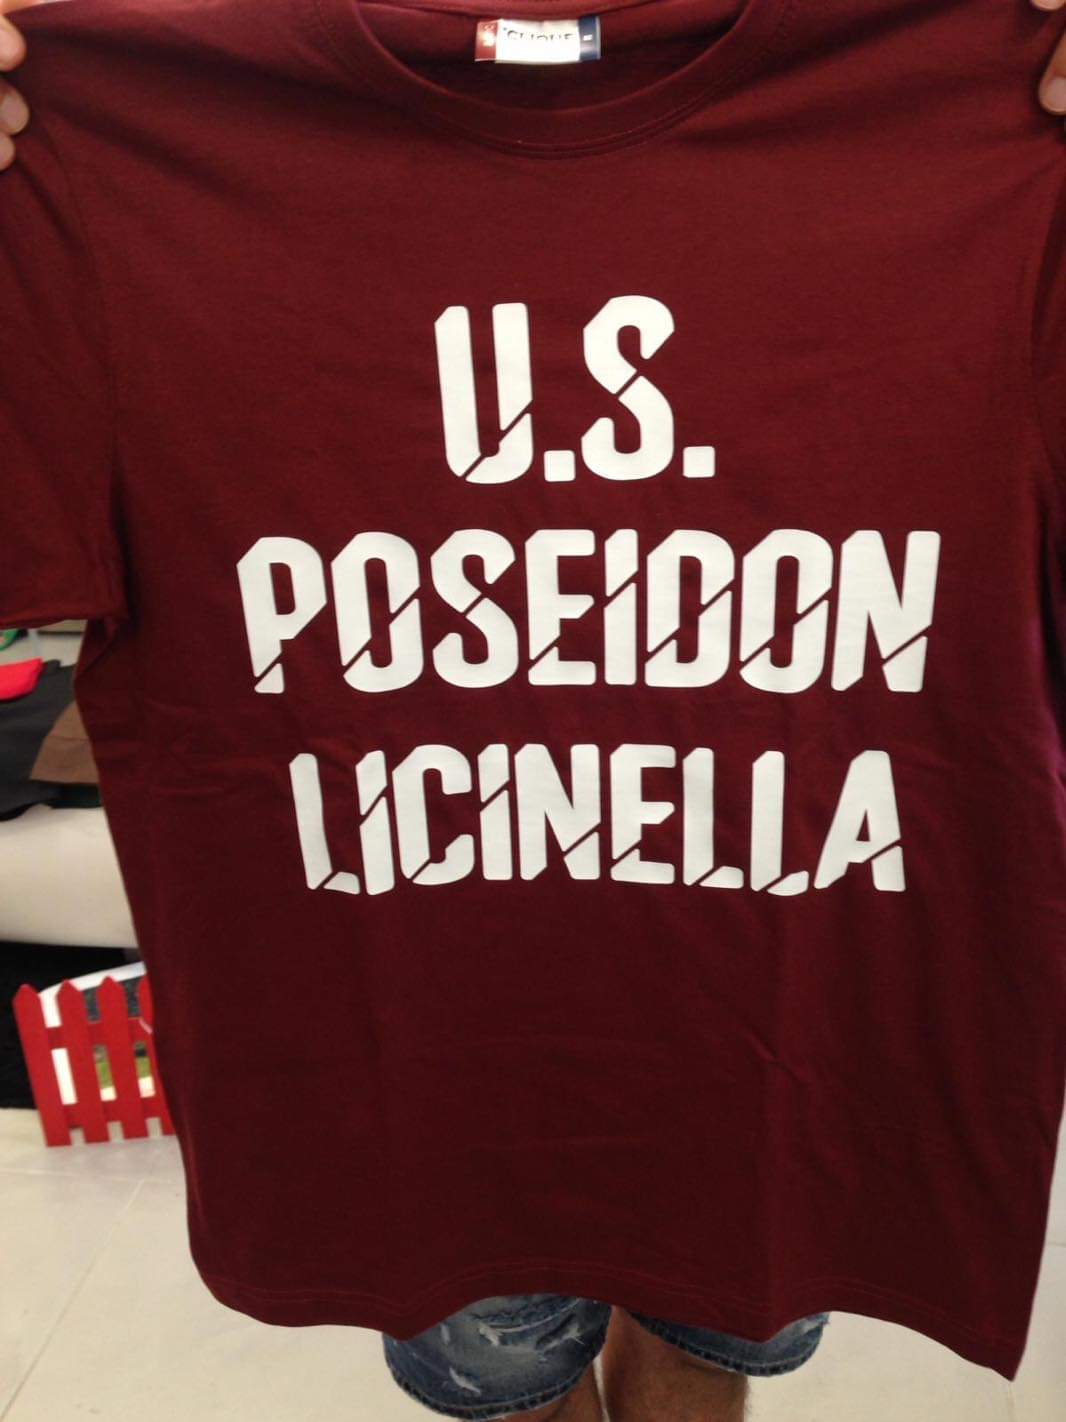 Poseidon-Licinella